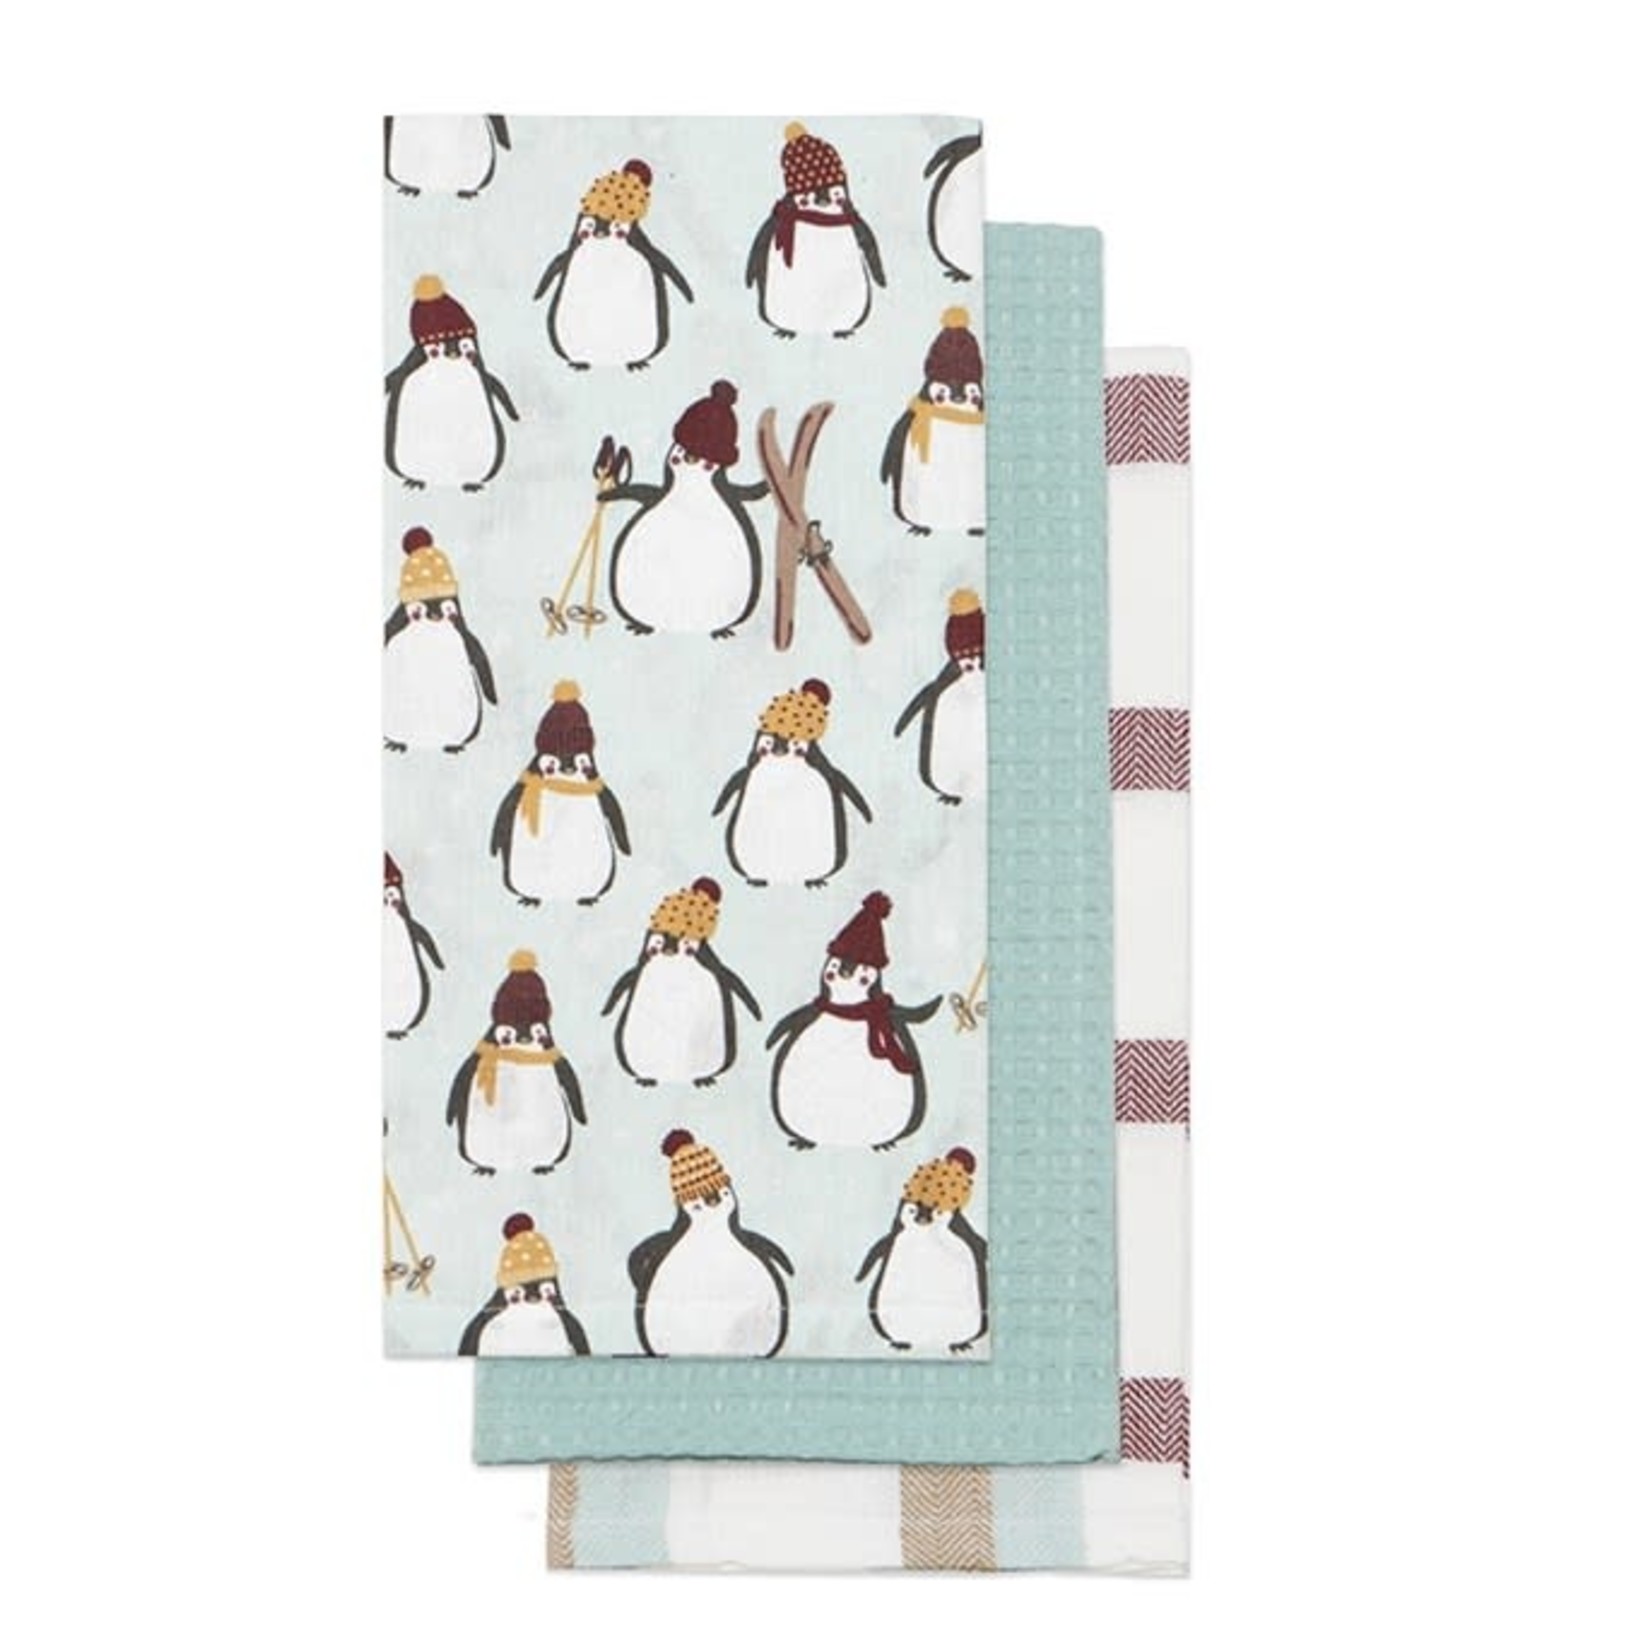 HARMAN HARMAN Penguin Tea Towel 18x26 - Blue